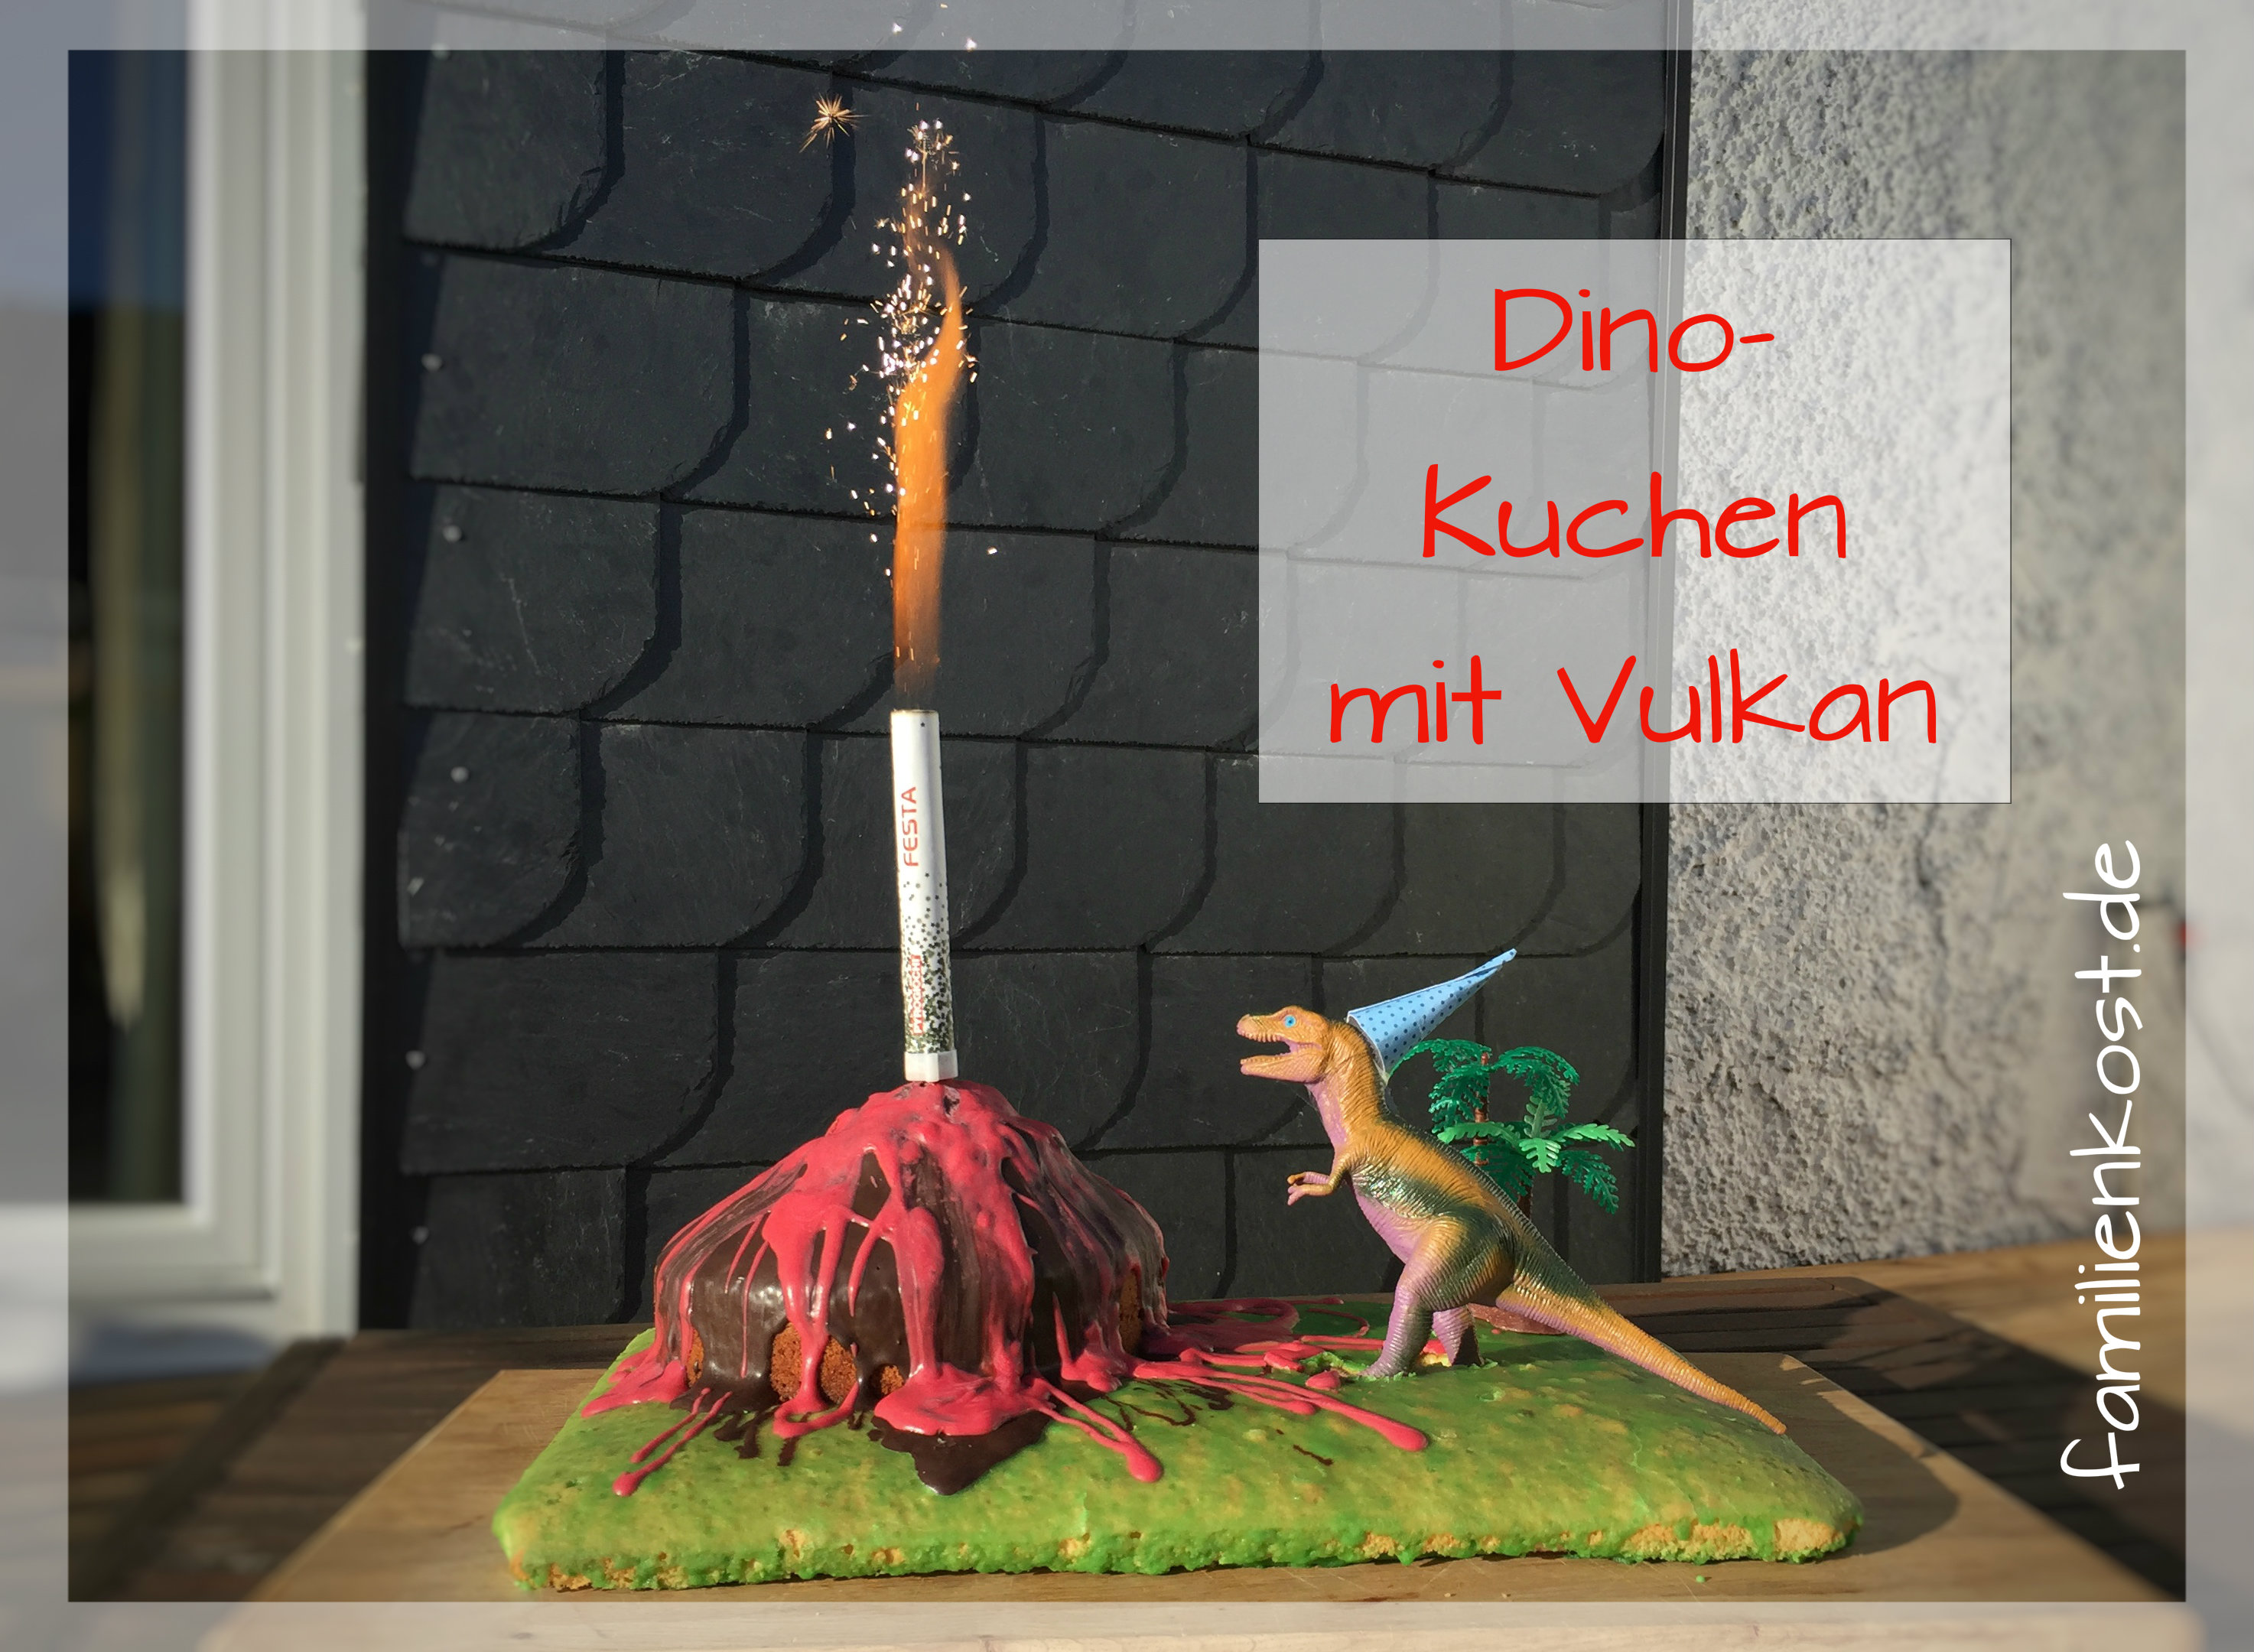 Dino Kuchen mit Vulkan